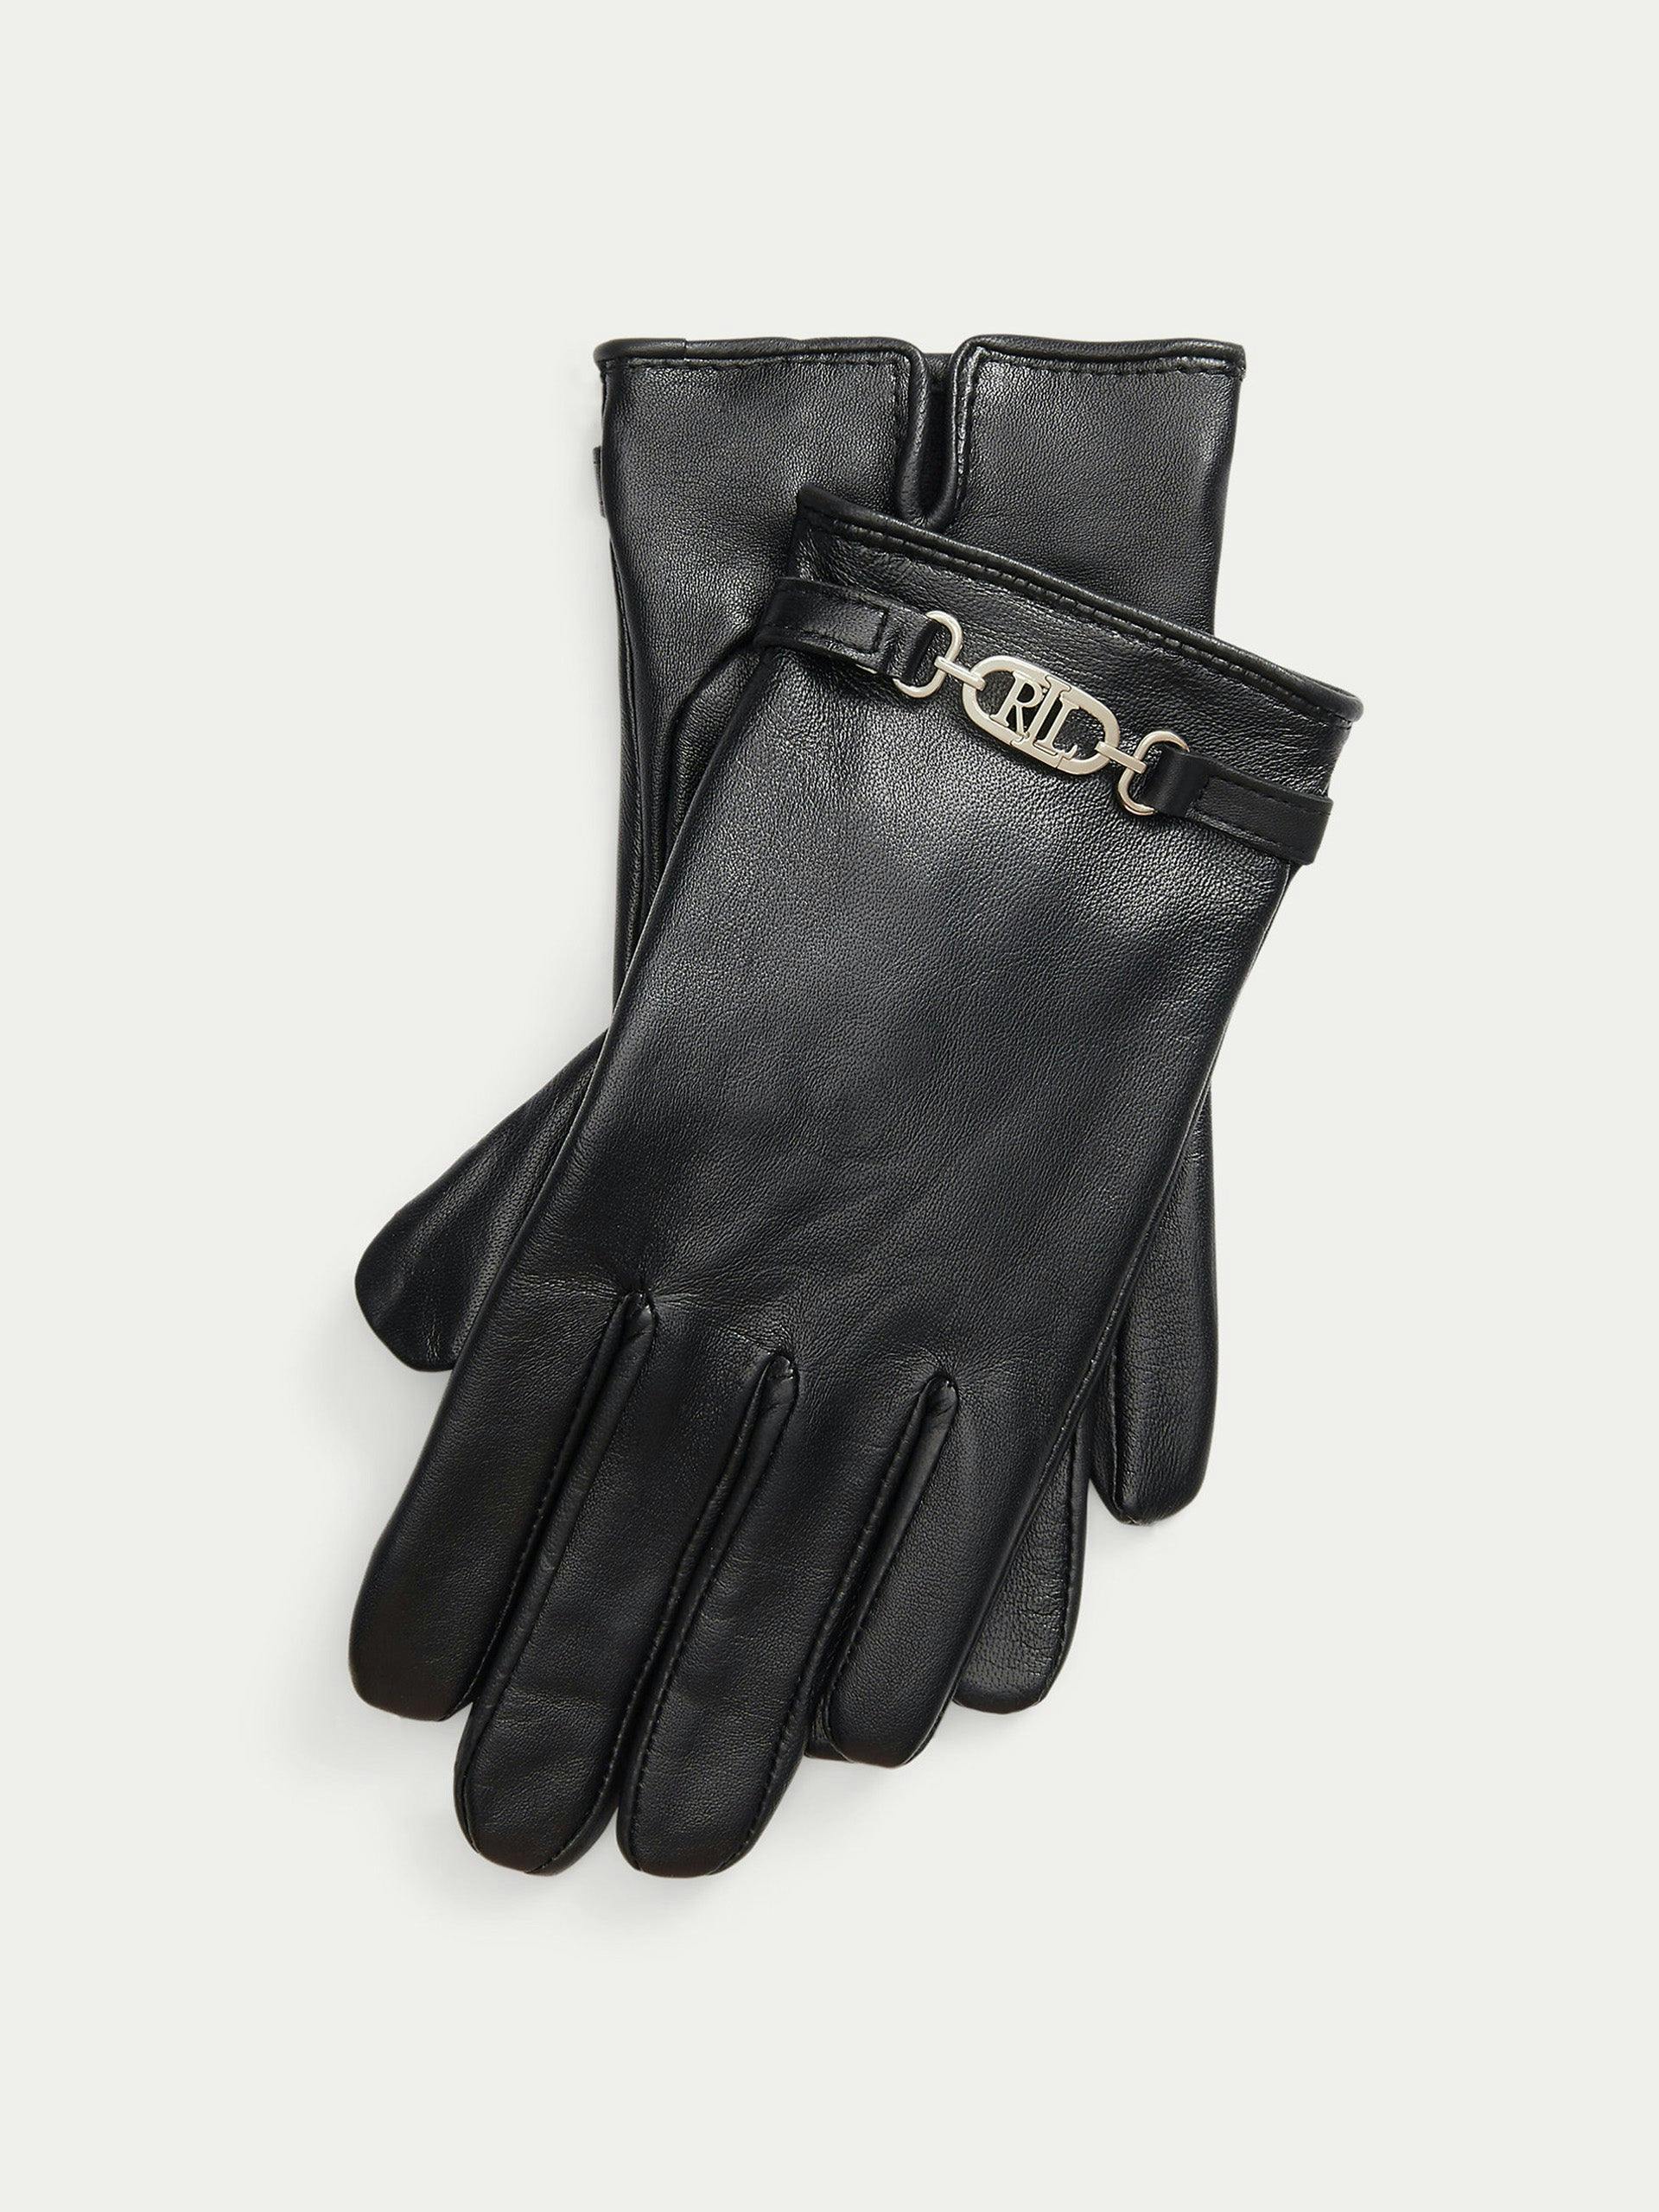 Sheepskin tech gloves